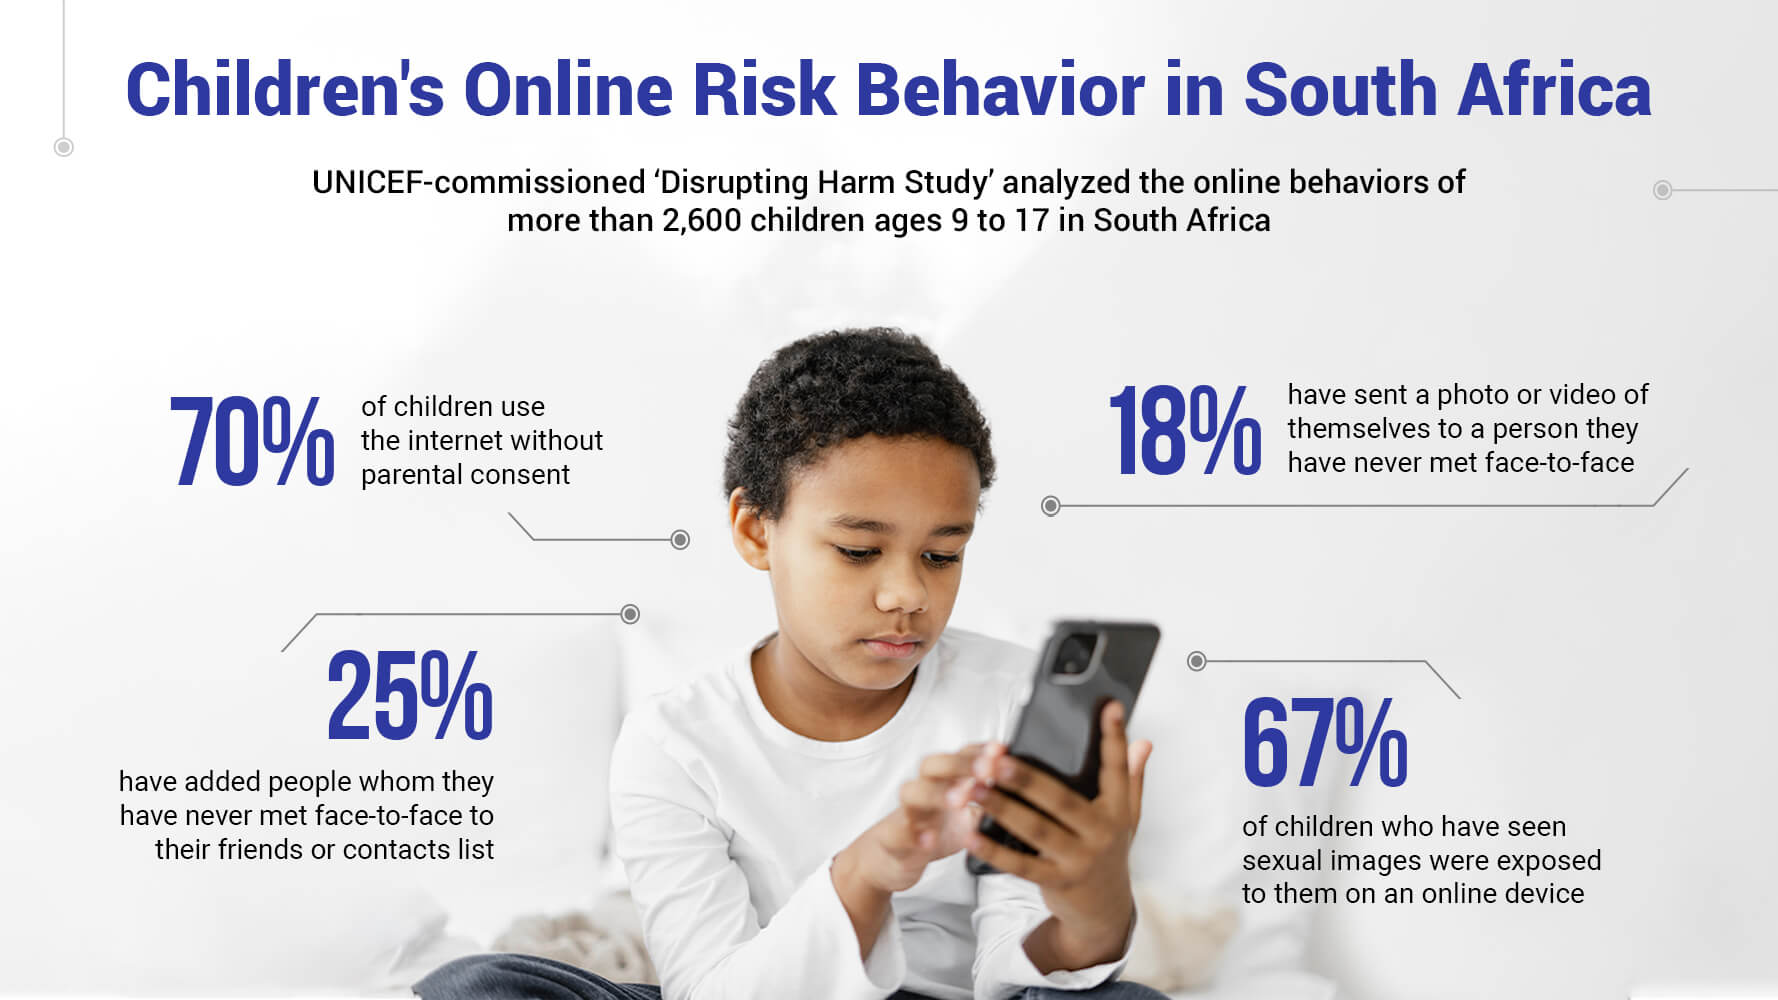 HeyLocate infographic showing online risk behavior of children in South Africa